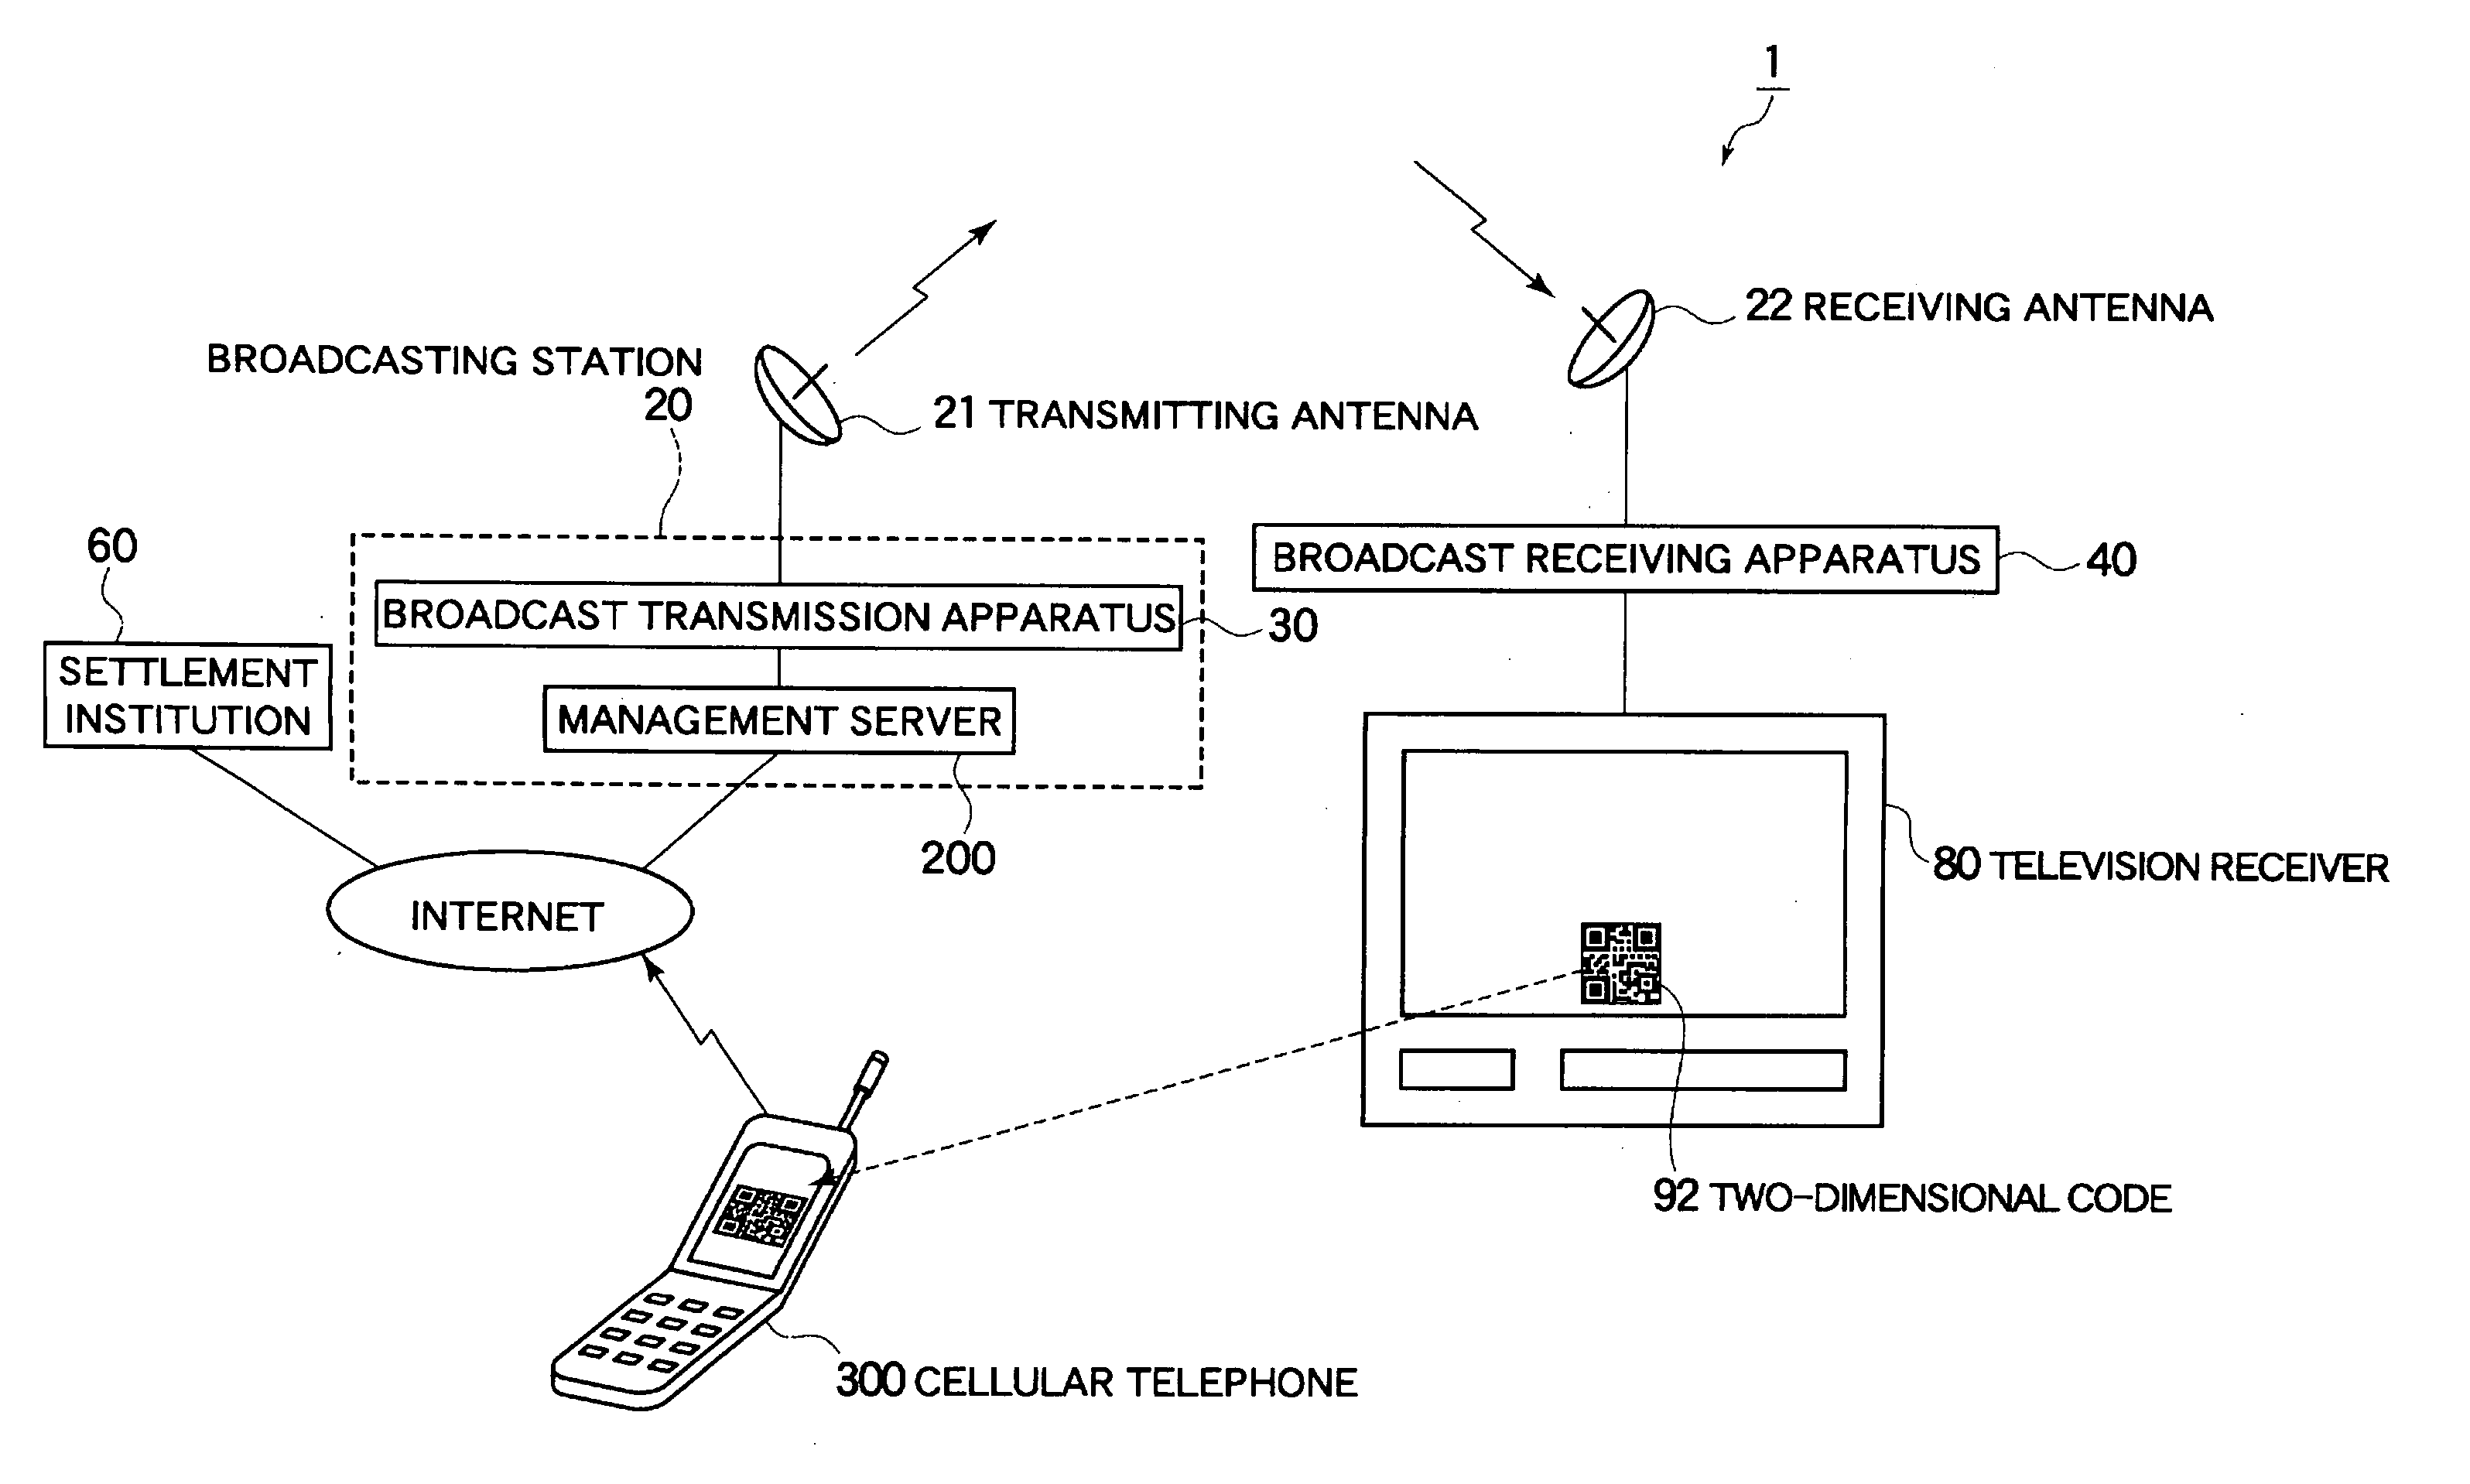 Broadcast receiving apparatus